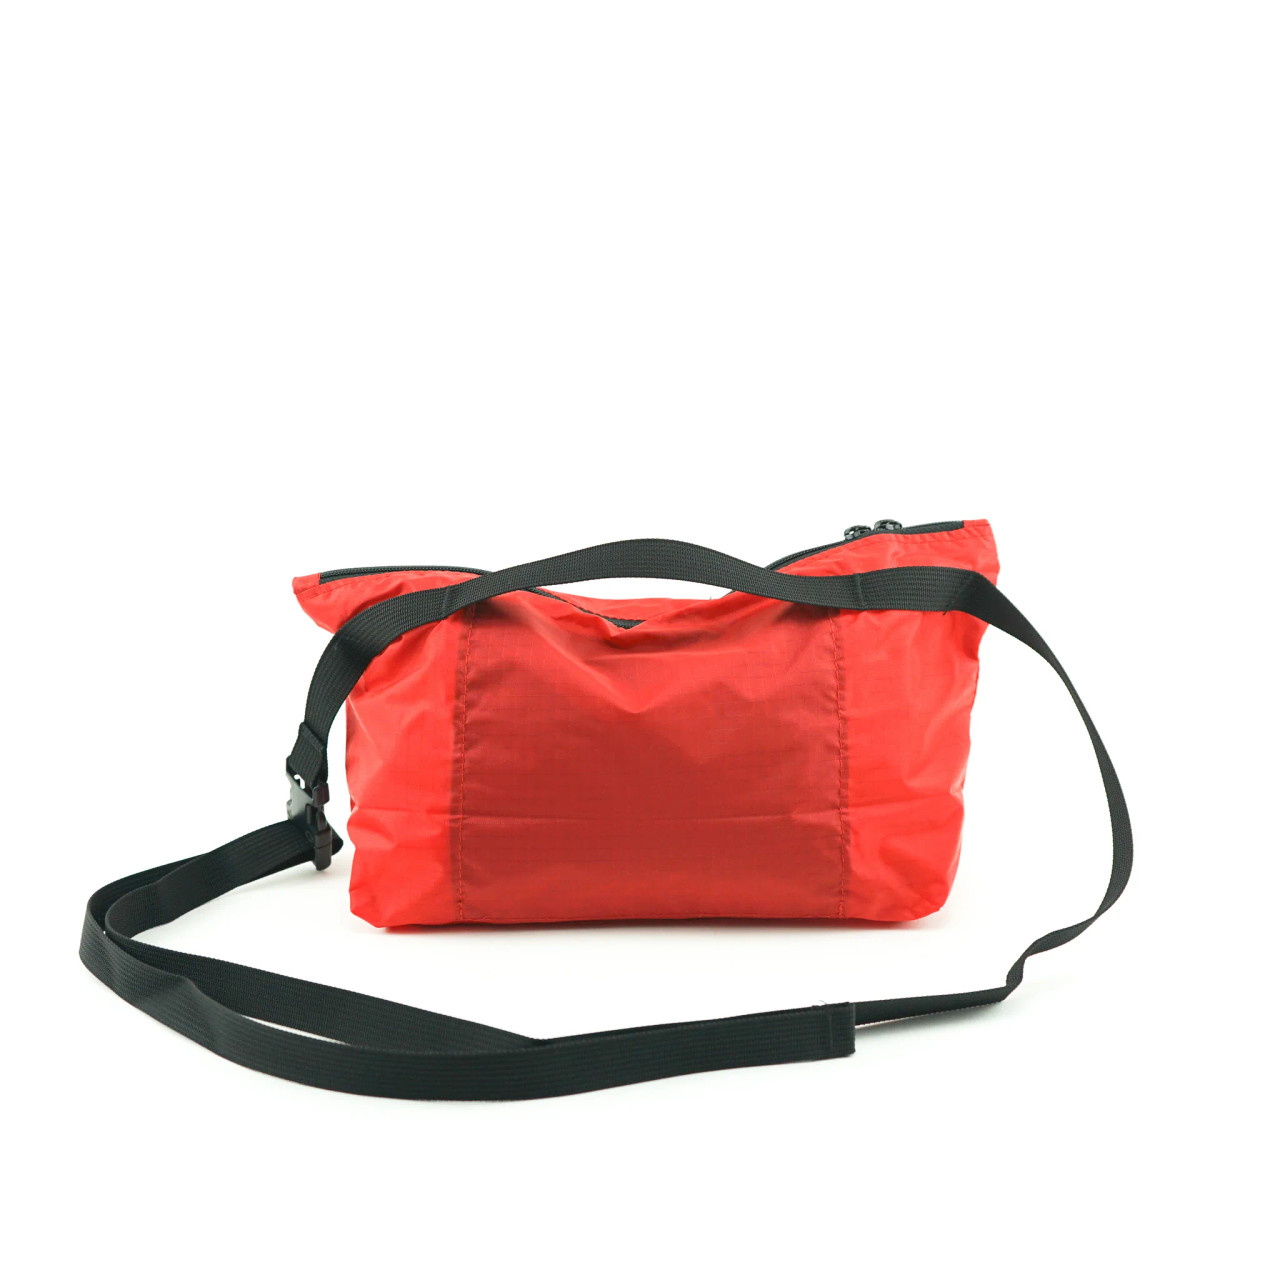 Bags In Progress: Fannypack Crossbody in Red, tomfoolery